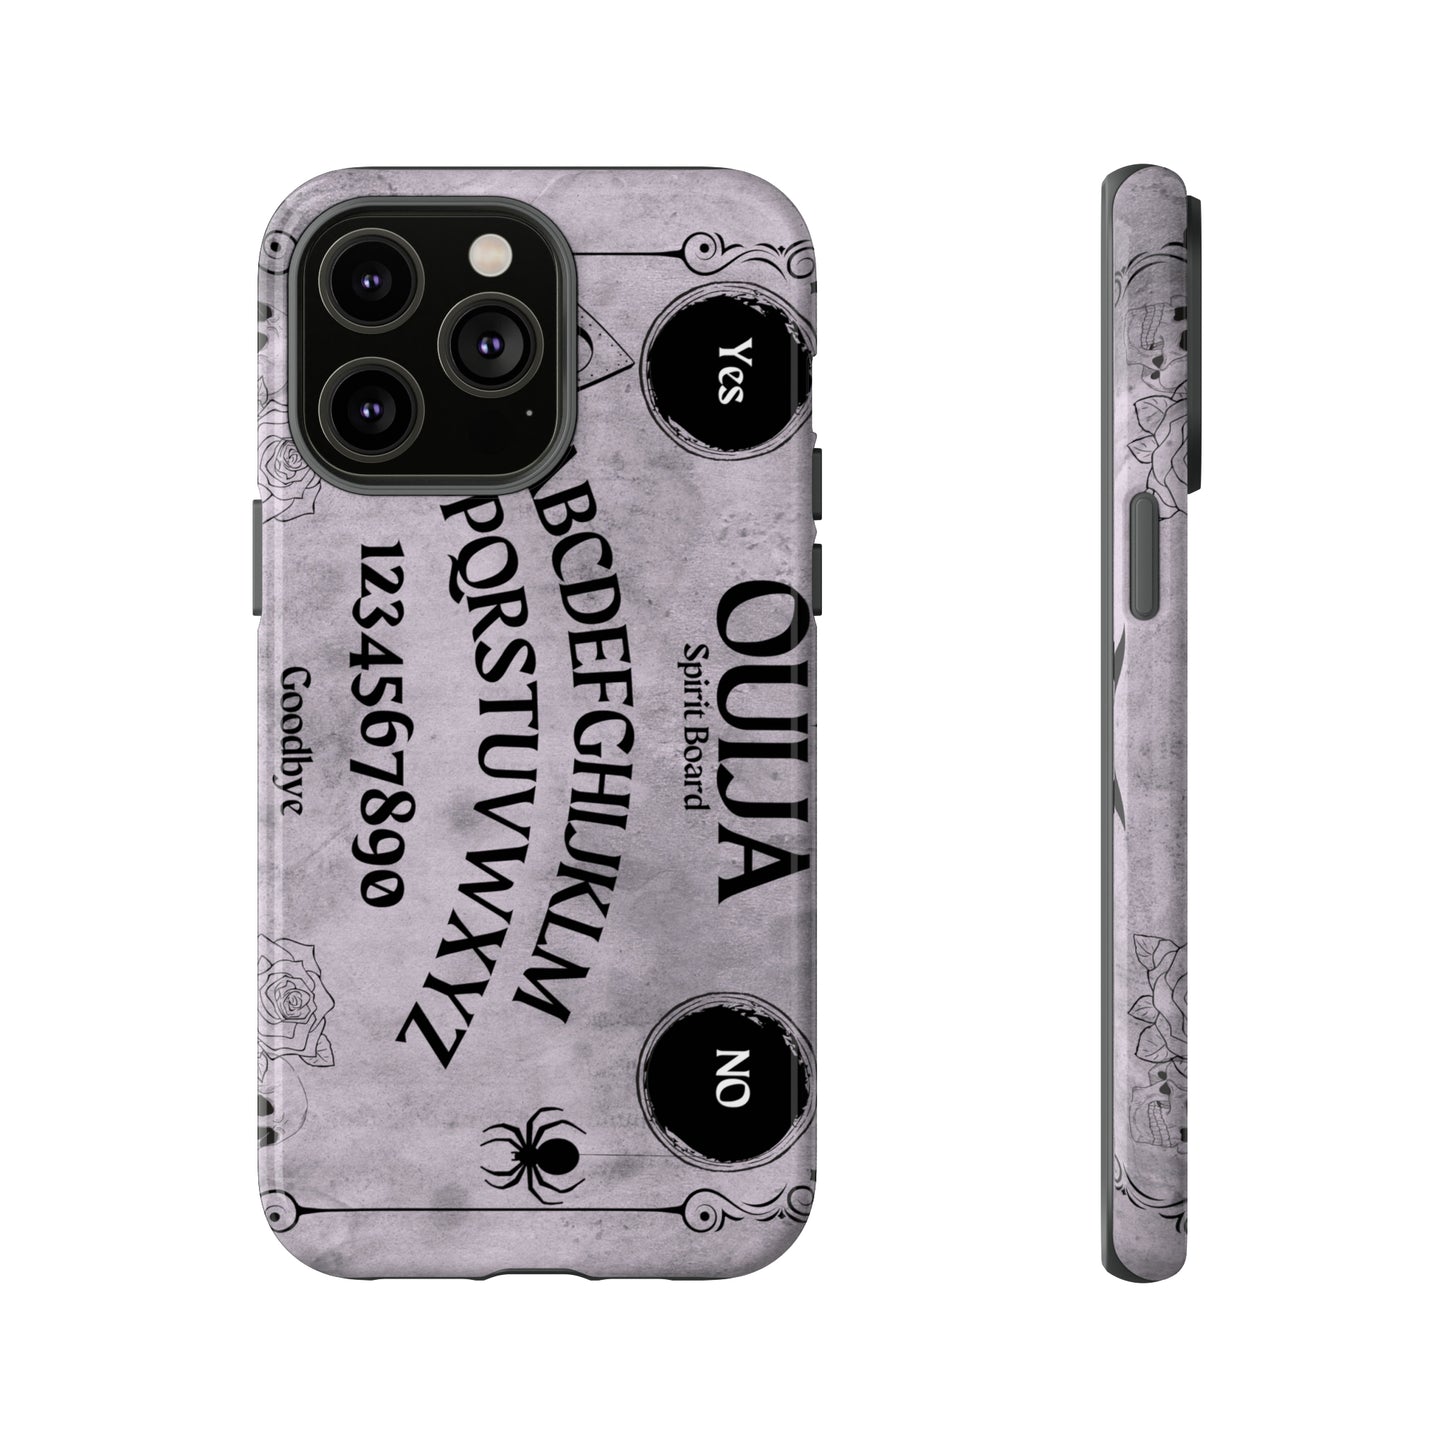 Ouija Board Tough Phone Cases For Samsung iPhone GooglePhone CaseVTZdesignsiPhone 14 Pro MaxGlossyAccessoriesGlossyhalloween